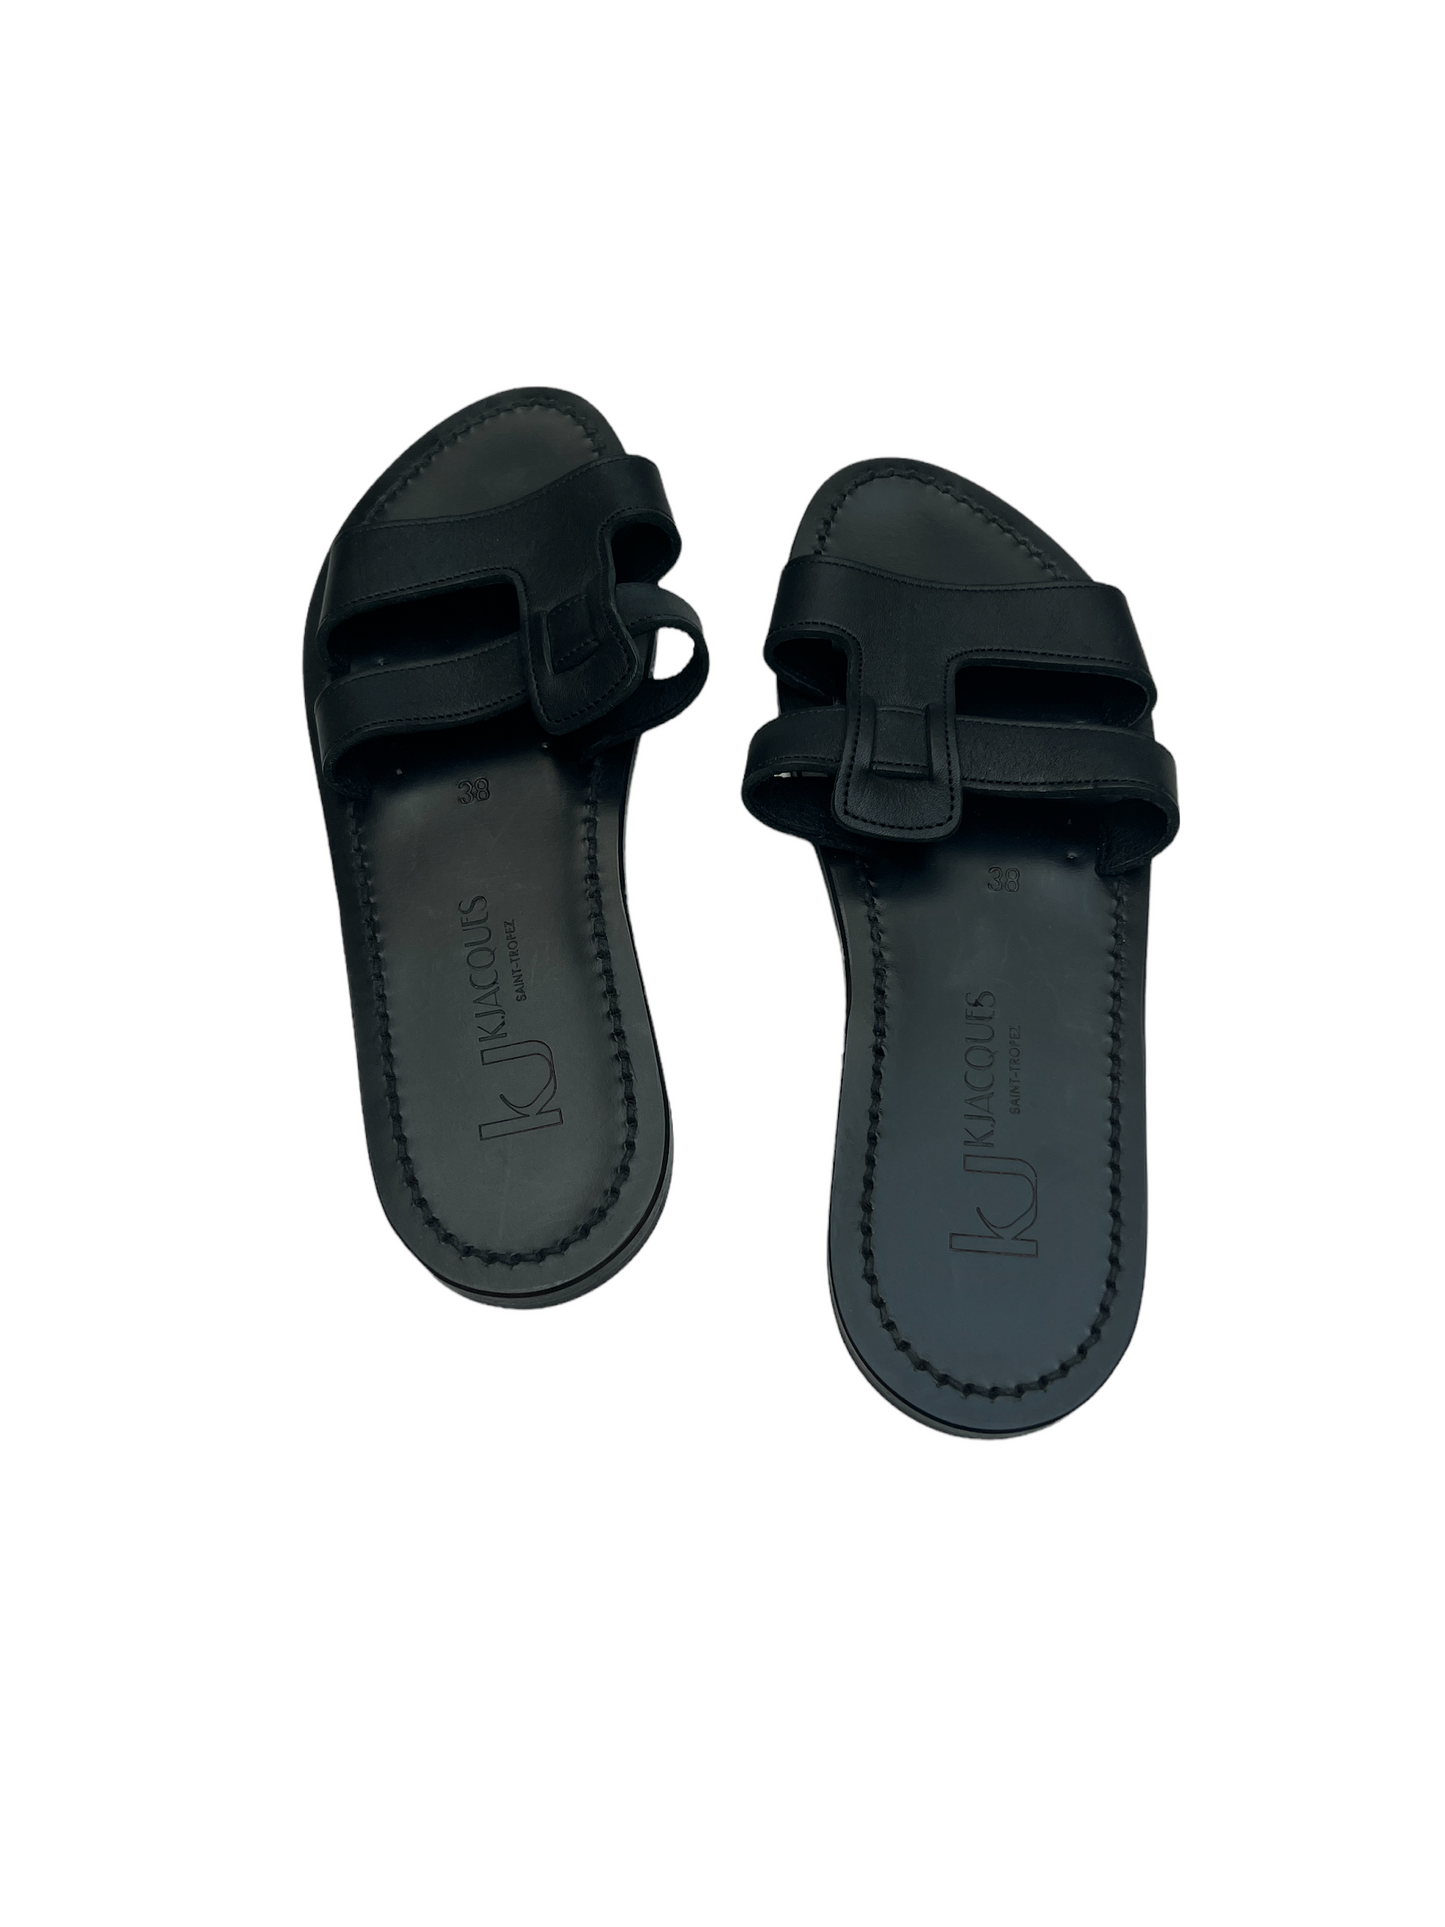 Black Leather Sandals - 7